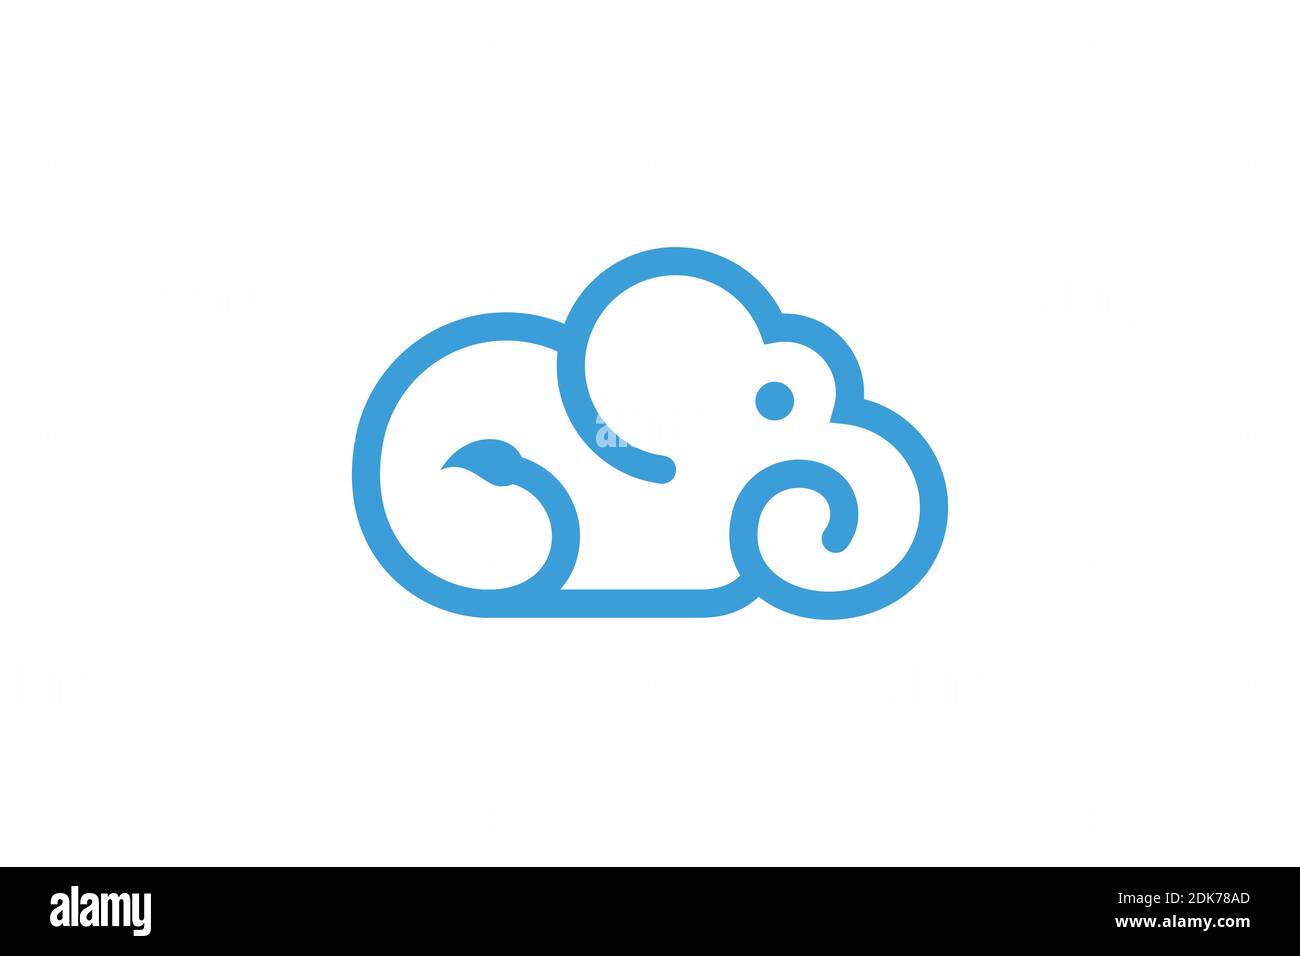 cloud elephant logo modern design inspiration Stock Vector